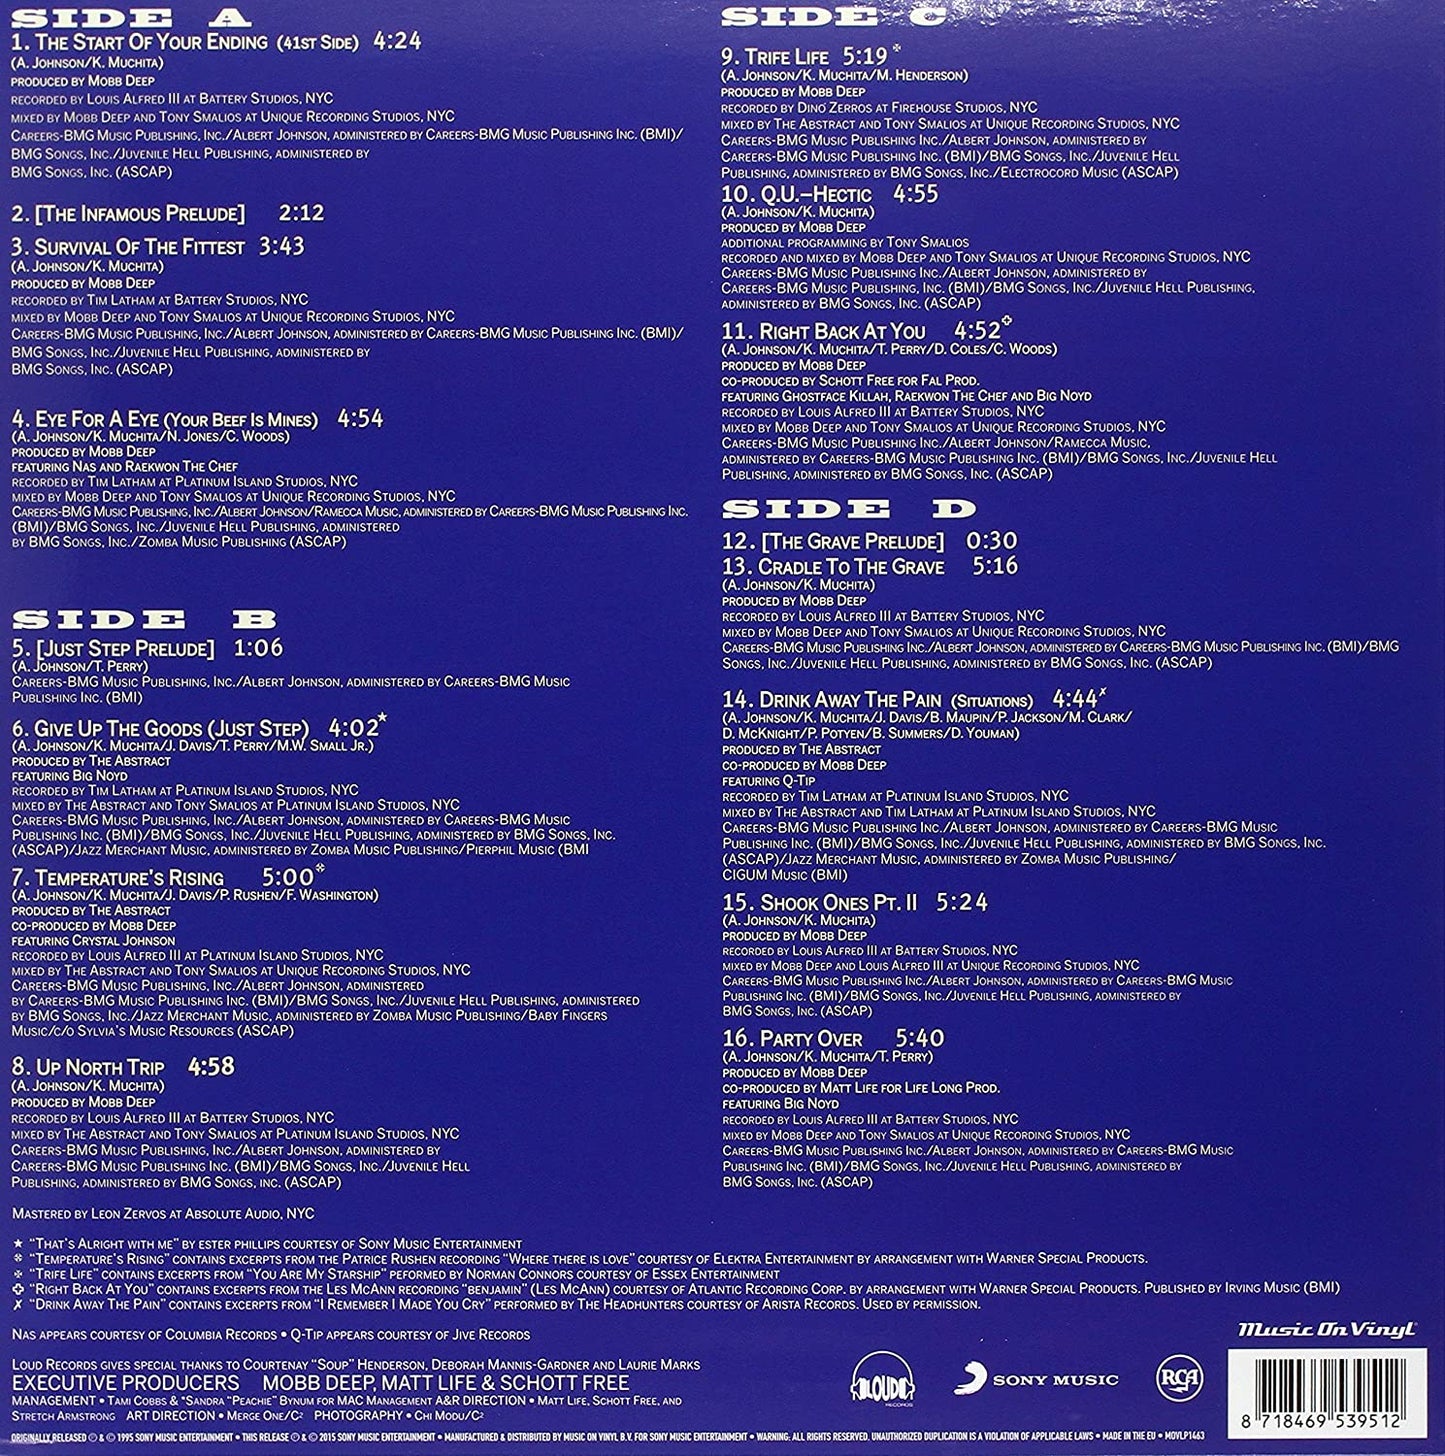 Mobb Deep/The Infamous (Audiophile Pressing) [LP]